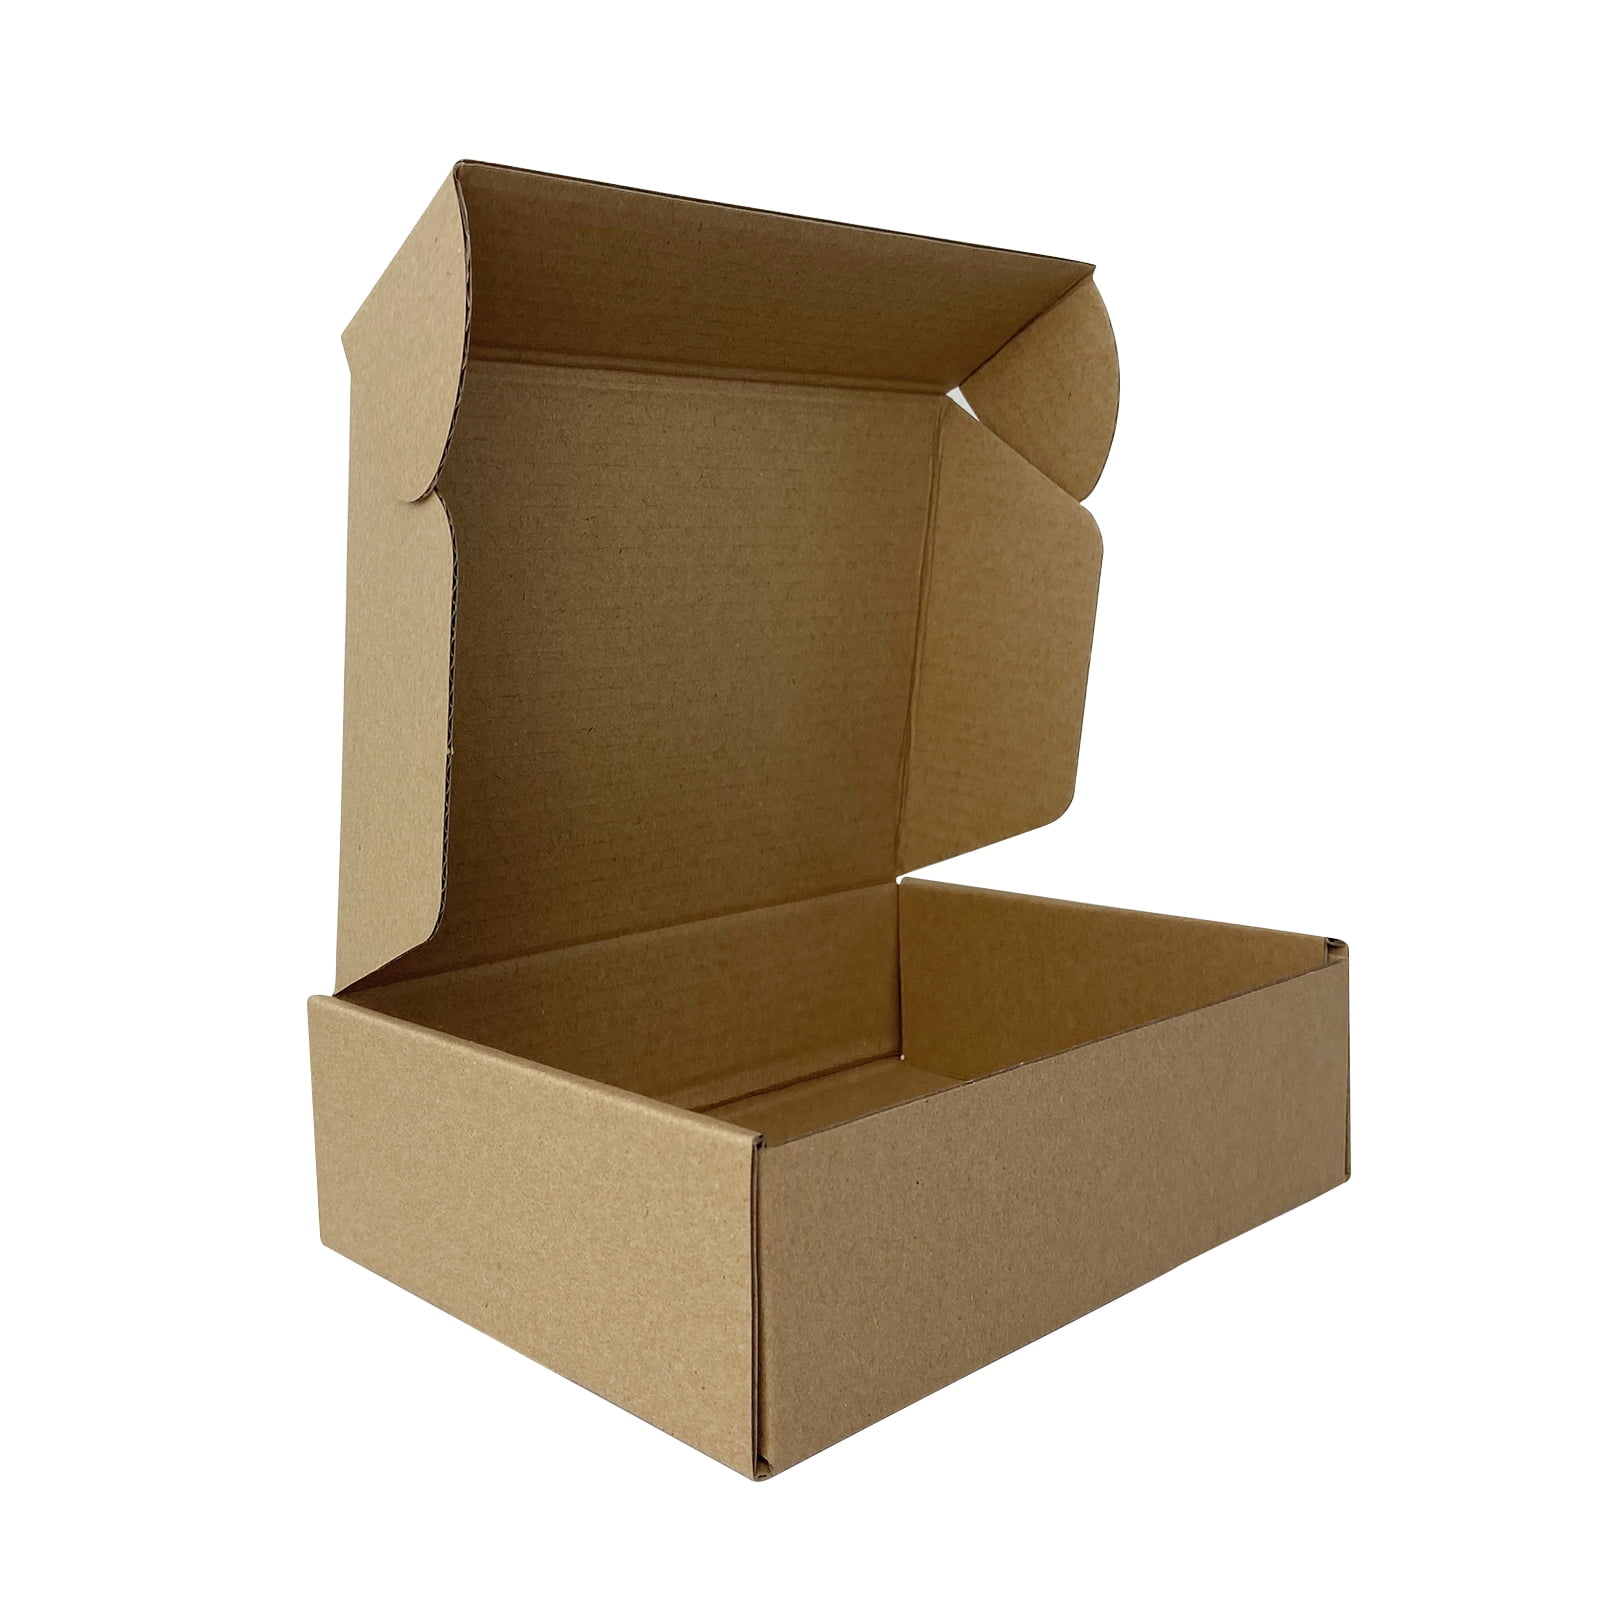  cubeta Cajas – 30 x 30 x 30, 5/PK : Productos de Oficina